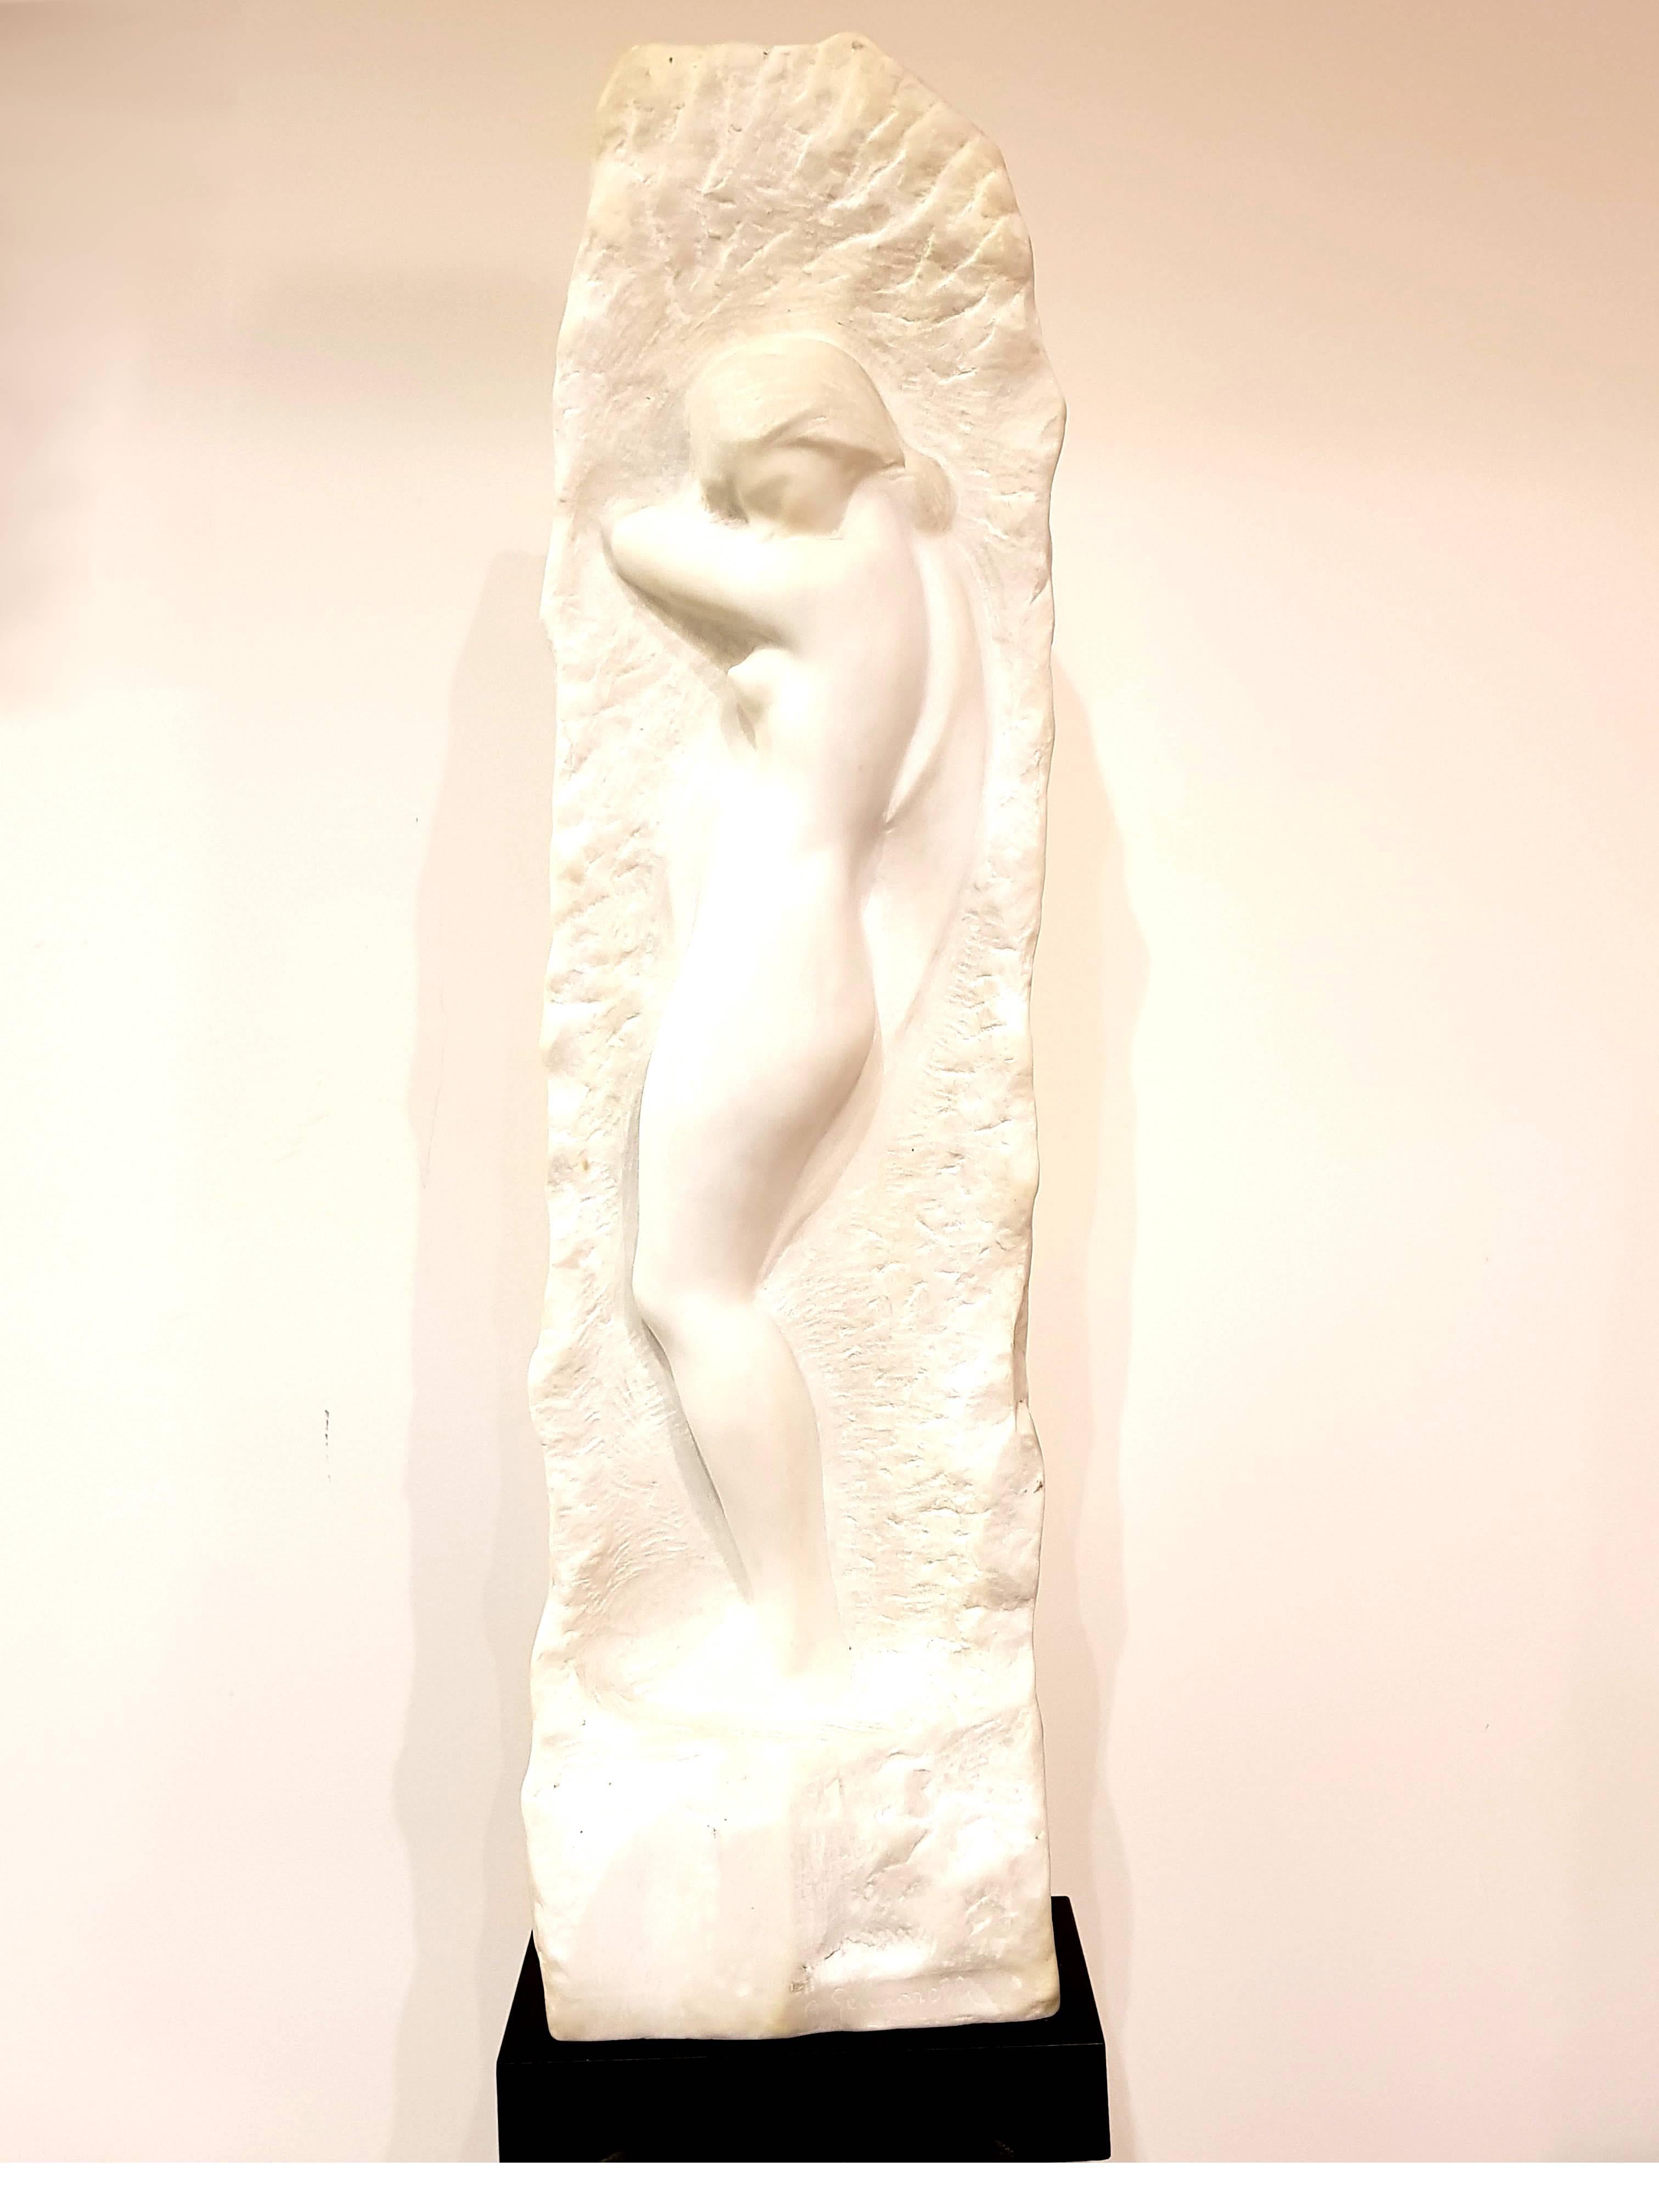 Amedeo Gennarelli - Unique Art Deco Marble Sculpture